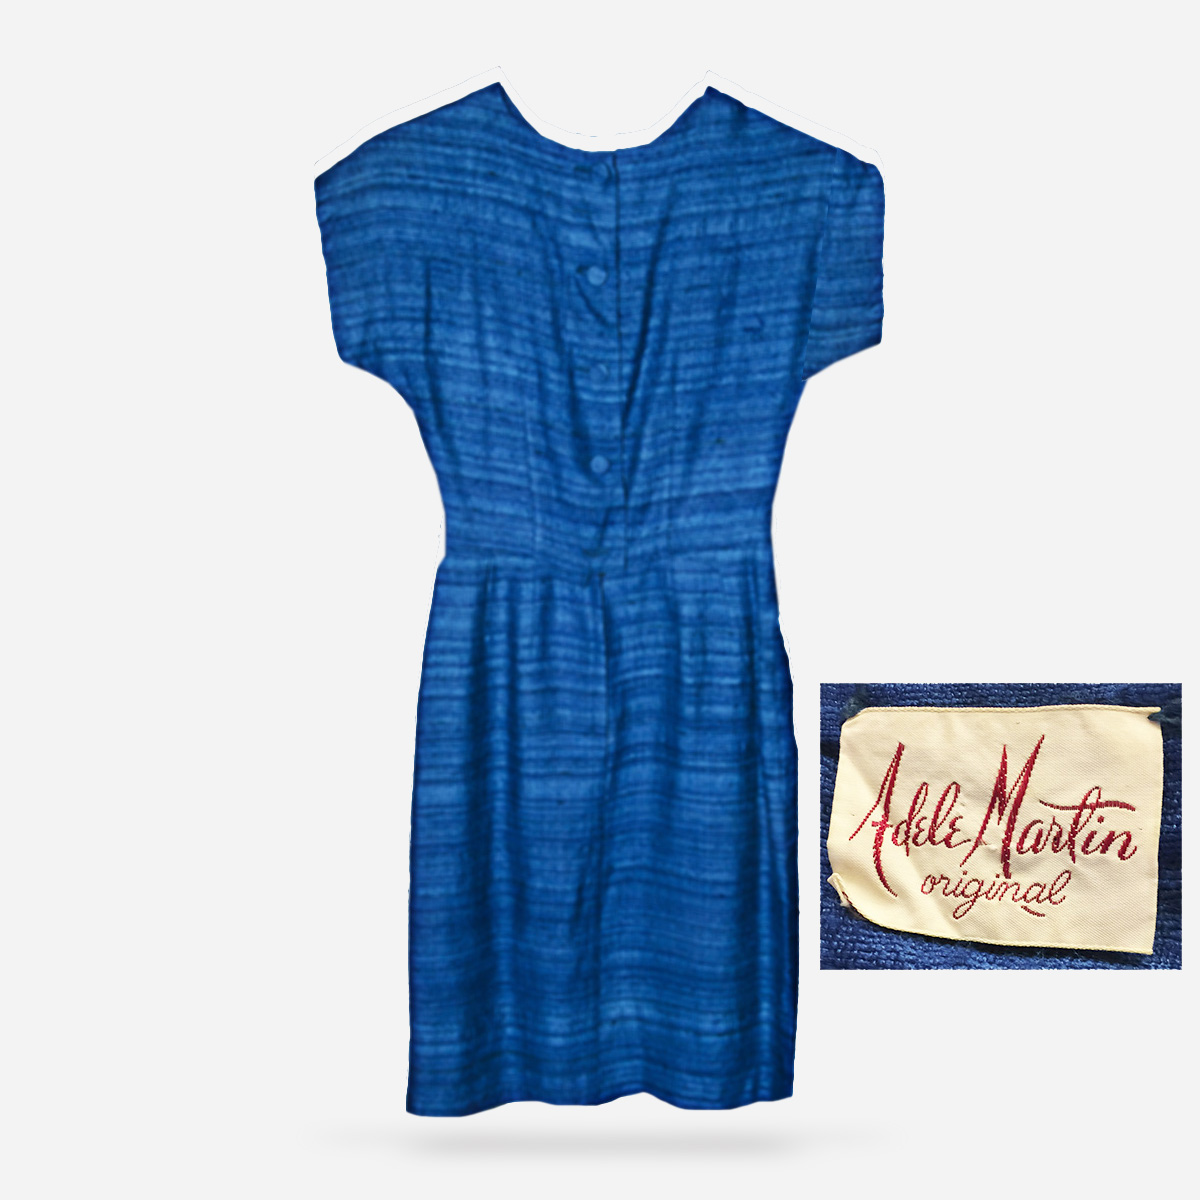 adele martin 1960s dress